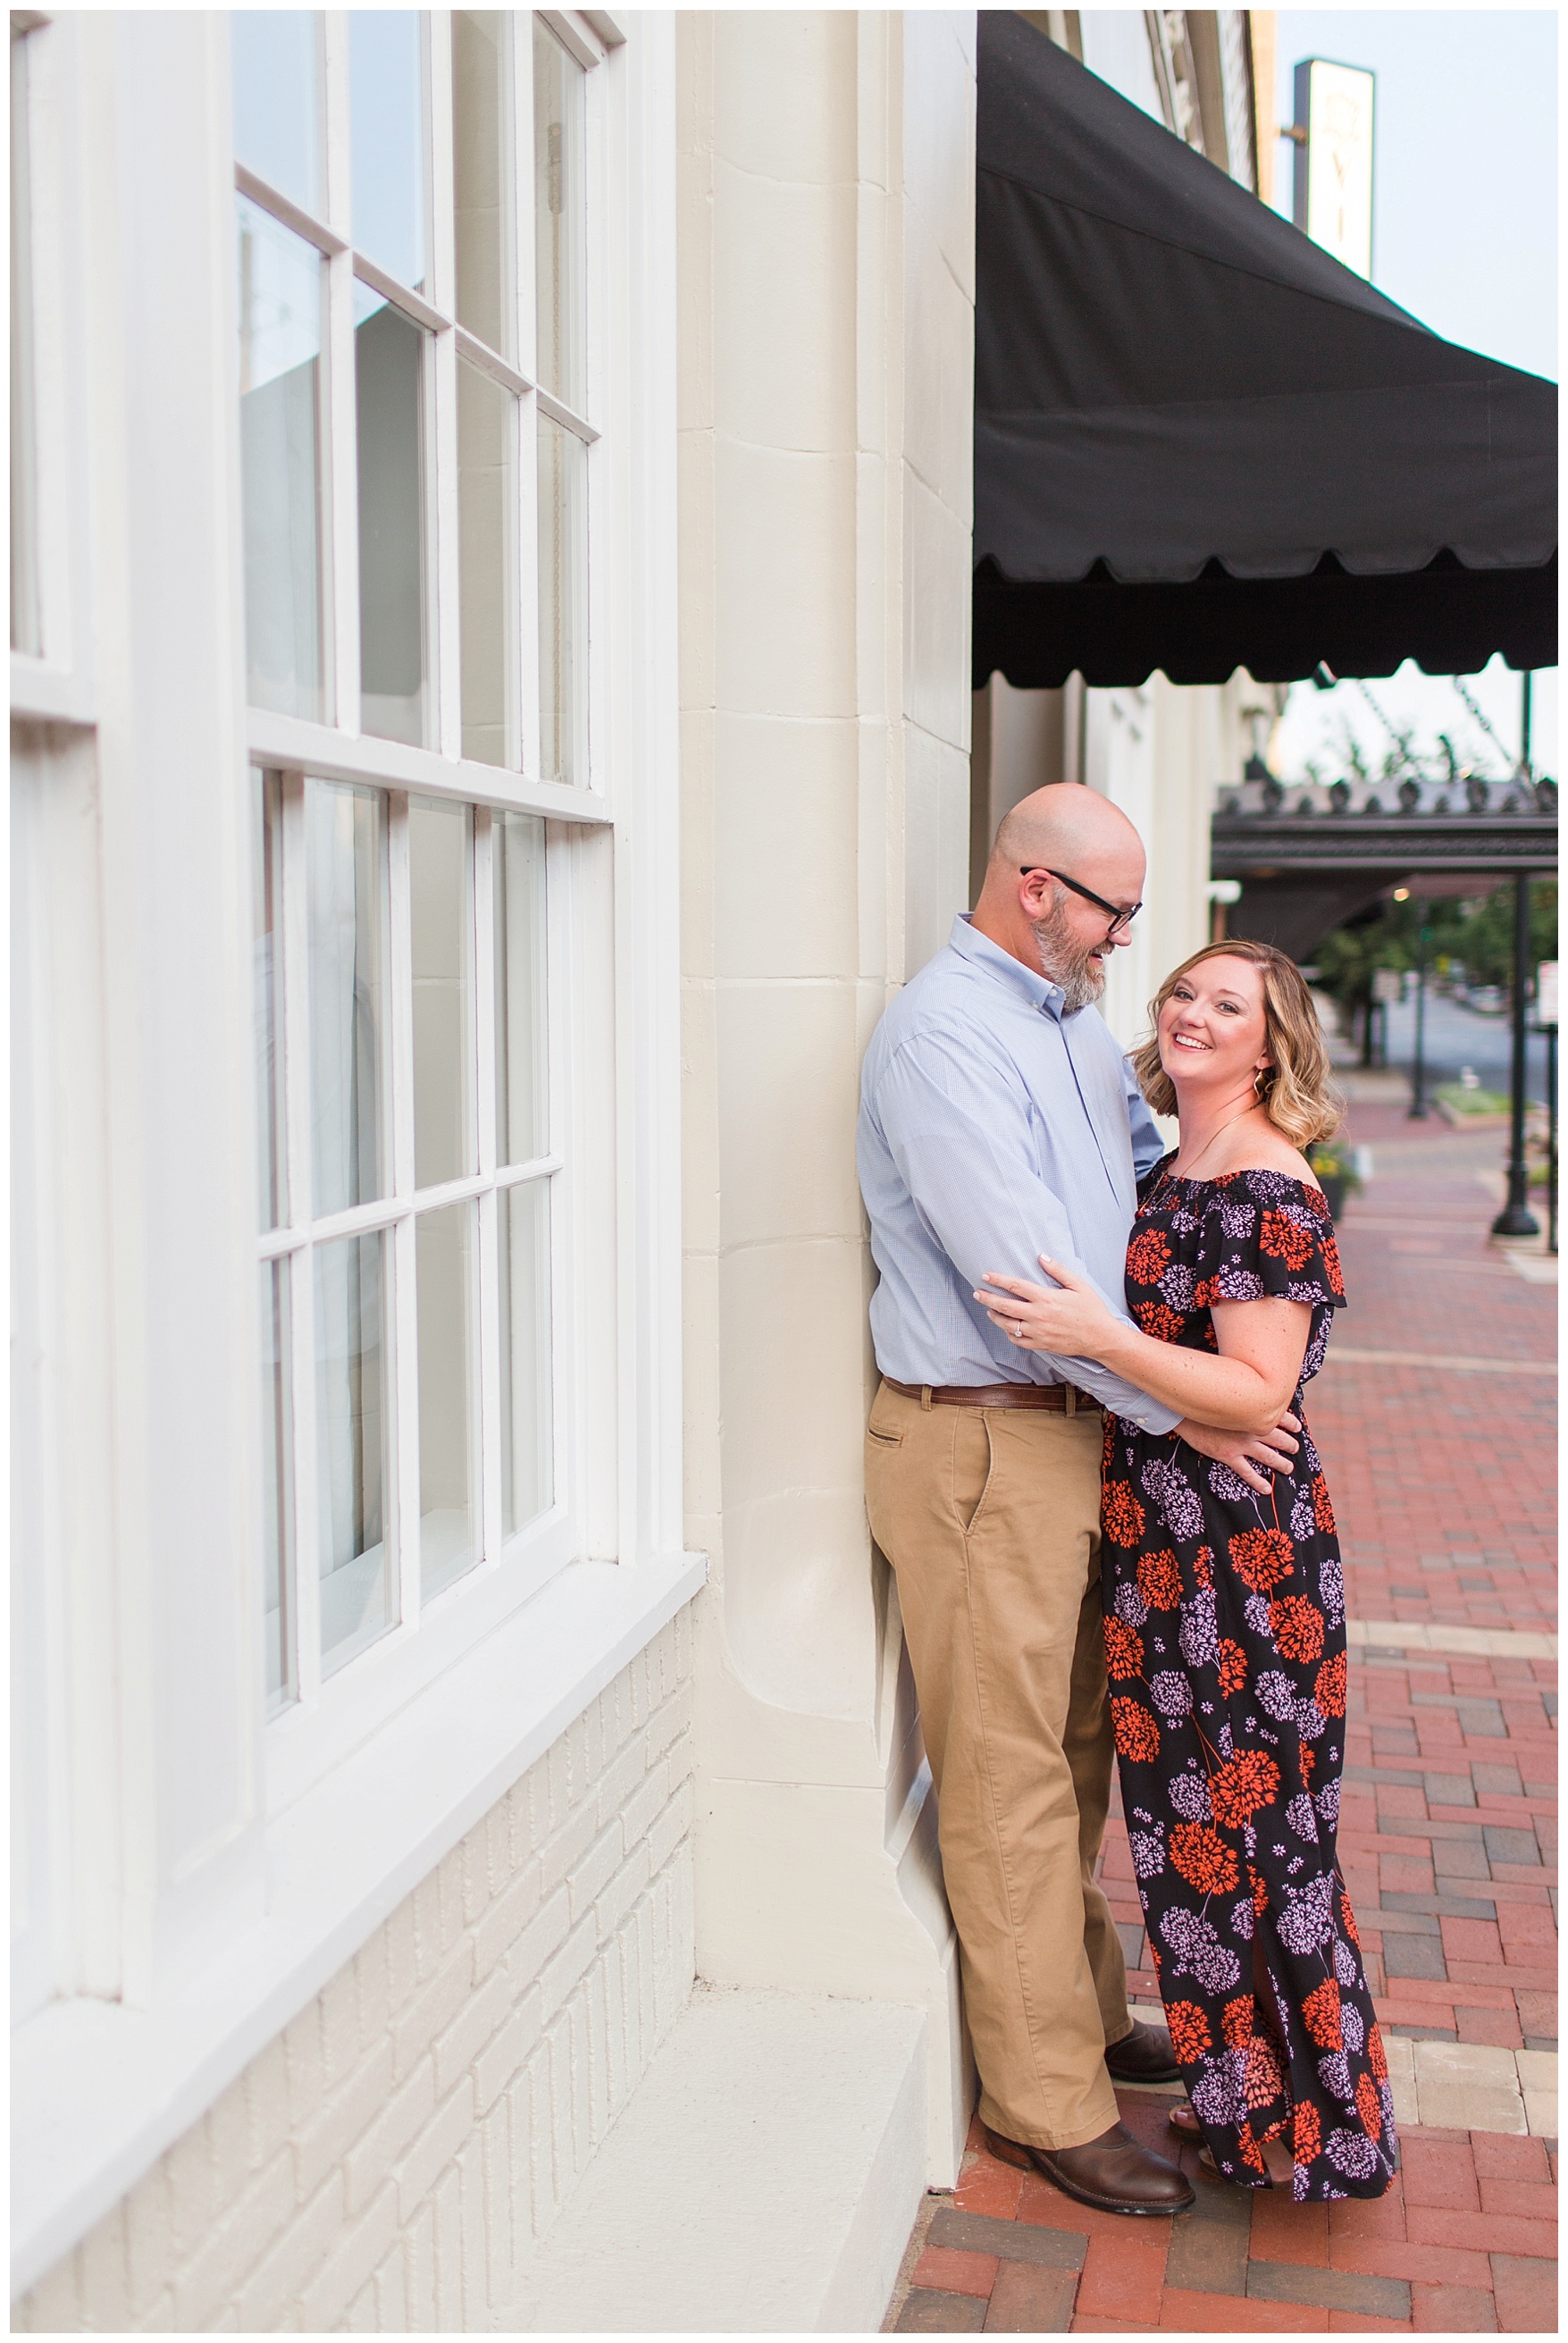 Downtown Lynchburg, VA Engagement Session || Lynchburg Wedding and Portrait photographer 